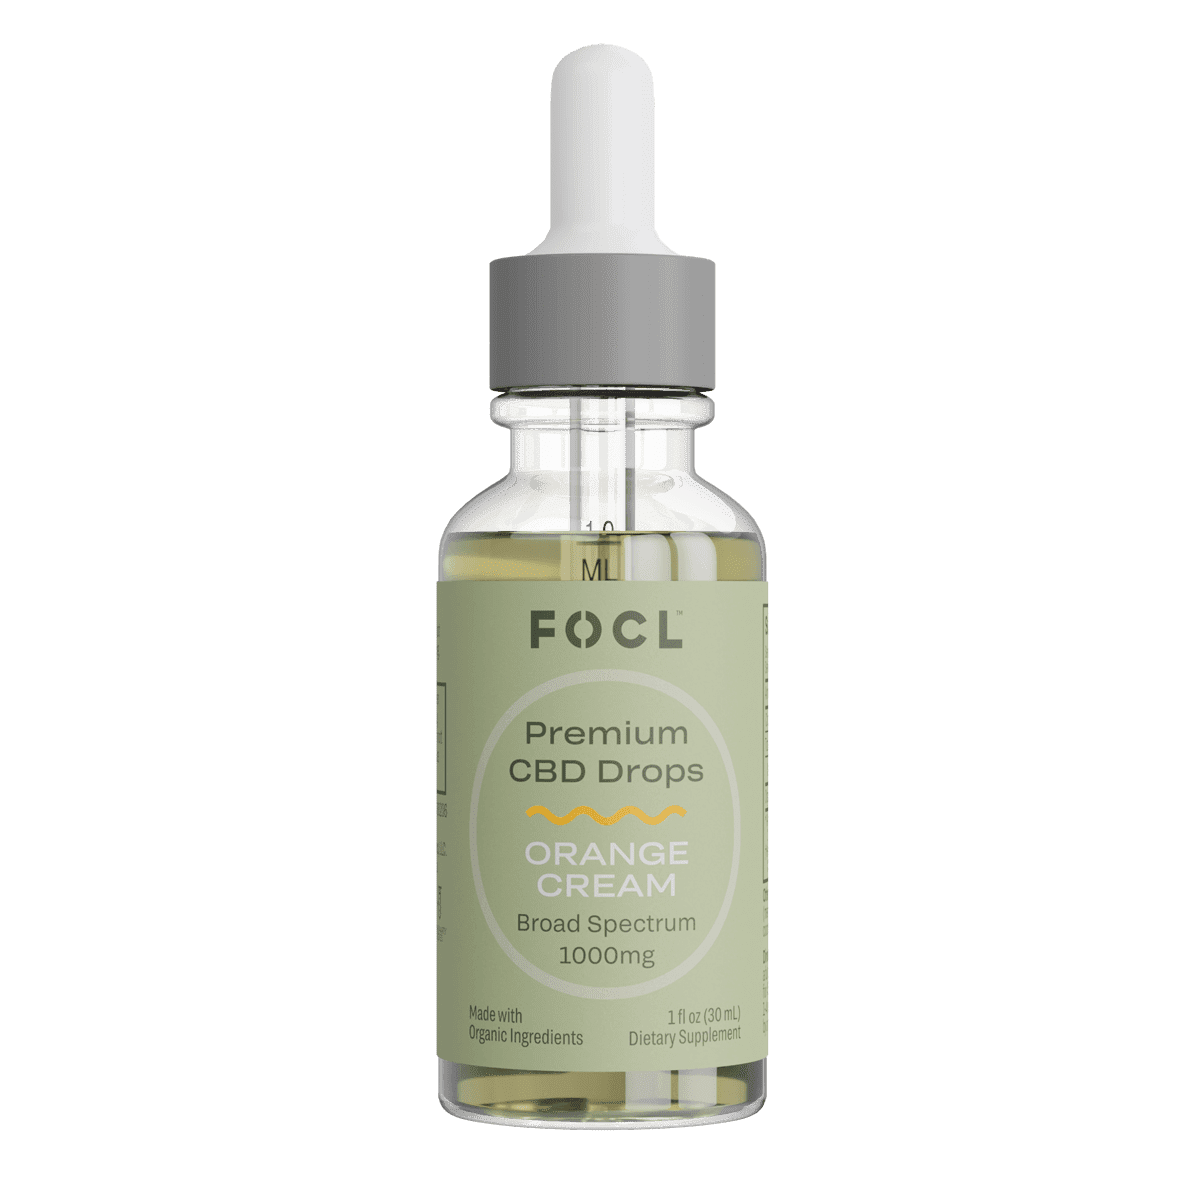 Focl CBD Drops - 1000mg (Orange Cream) image1